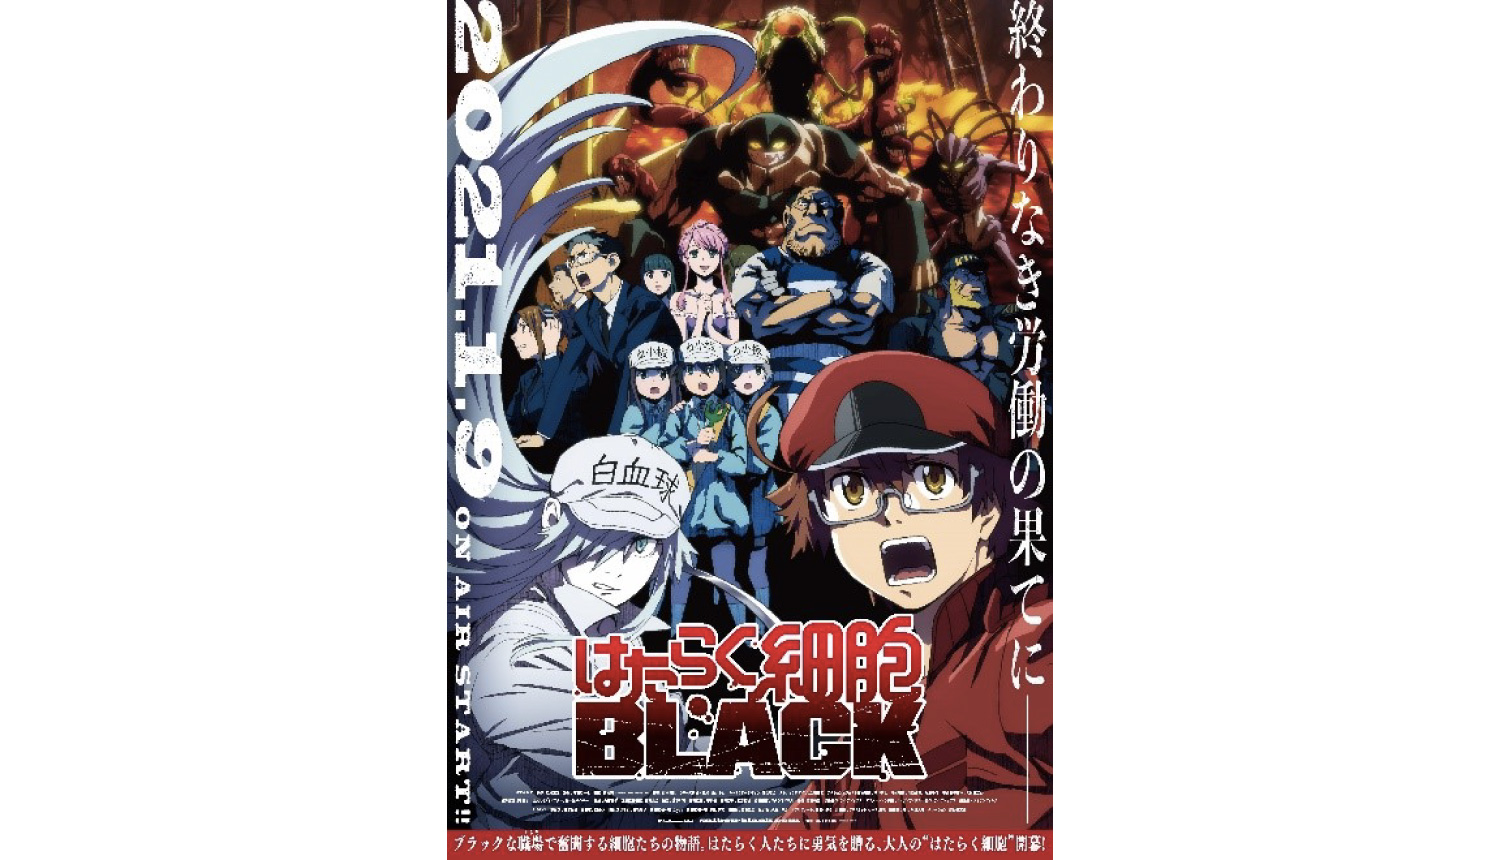 Hataraku saibou BLACK 4 Japanese comic manga anime Cells at Work! Akane  Shimizu